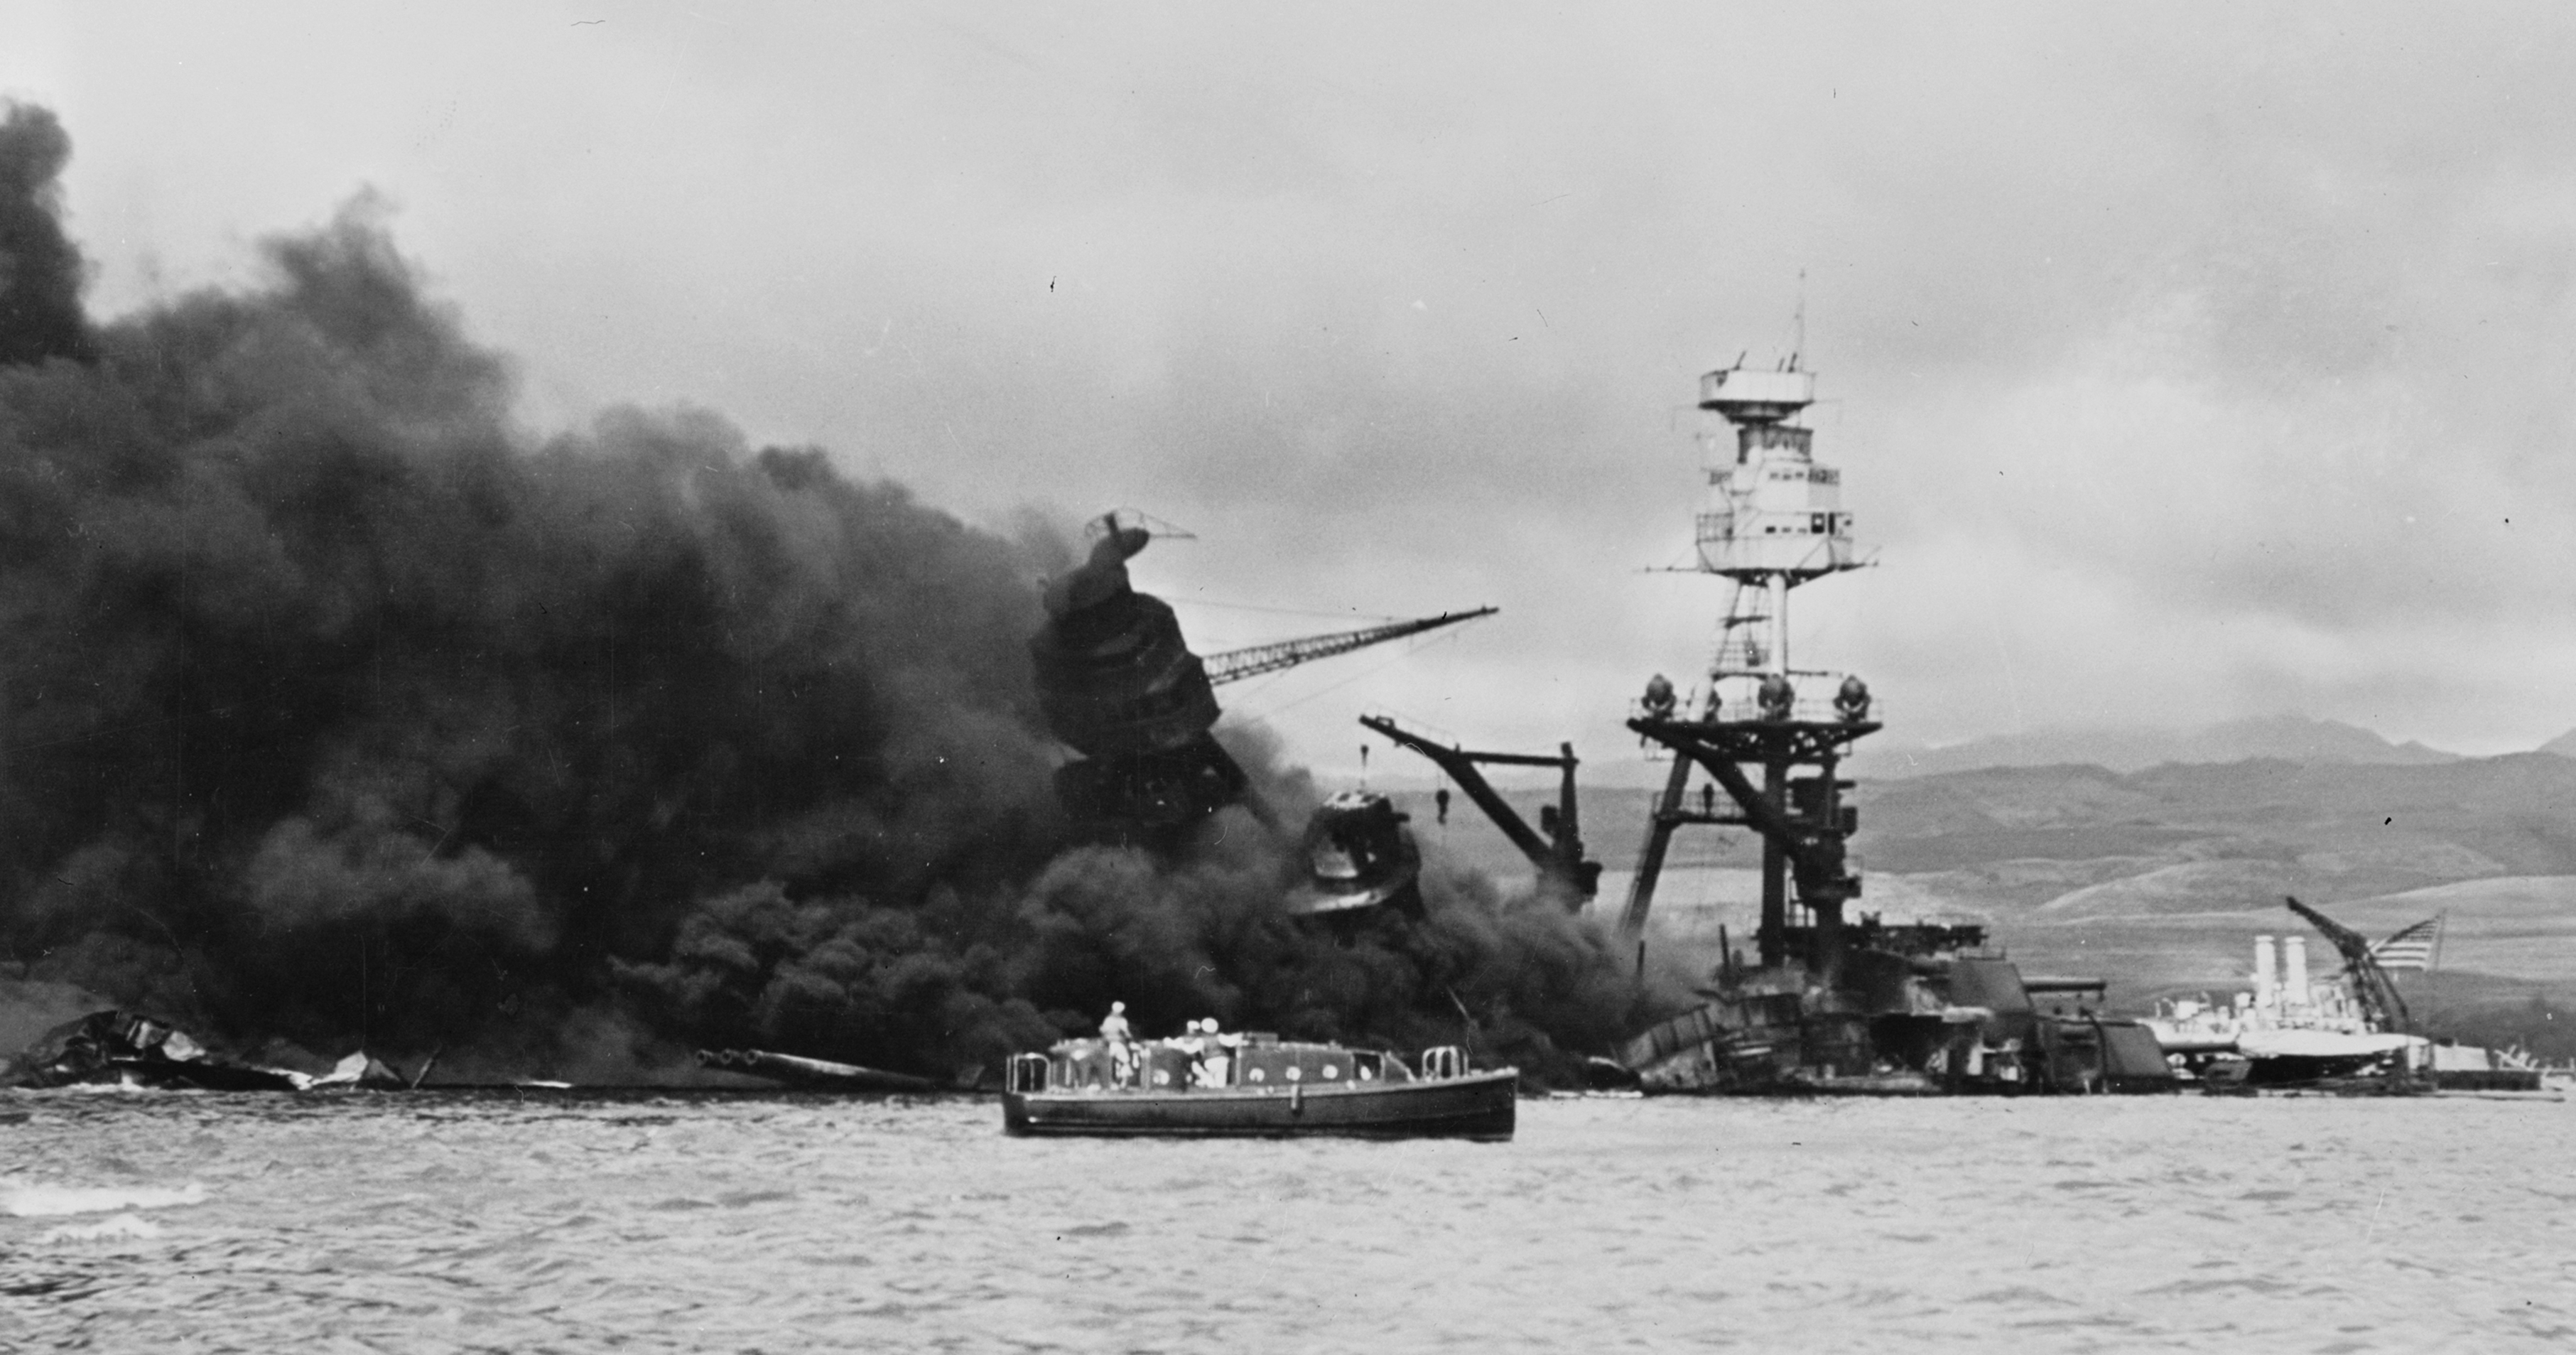 Wreckage of USS Arizona, Pearl Harbor, US Territory of Hawaii, 7 Dec 1941